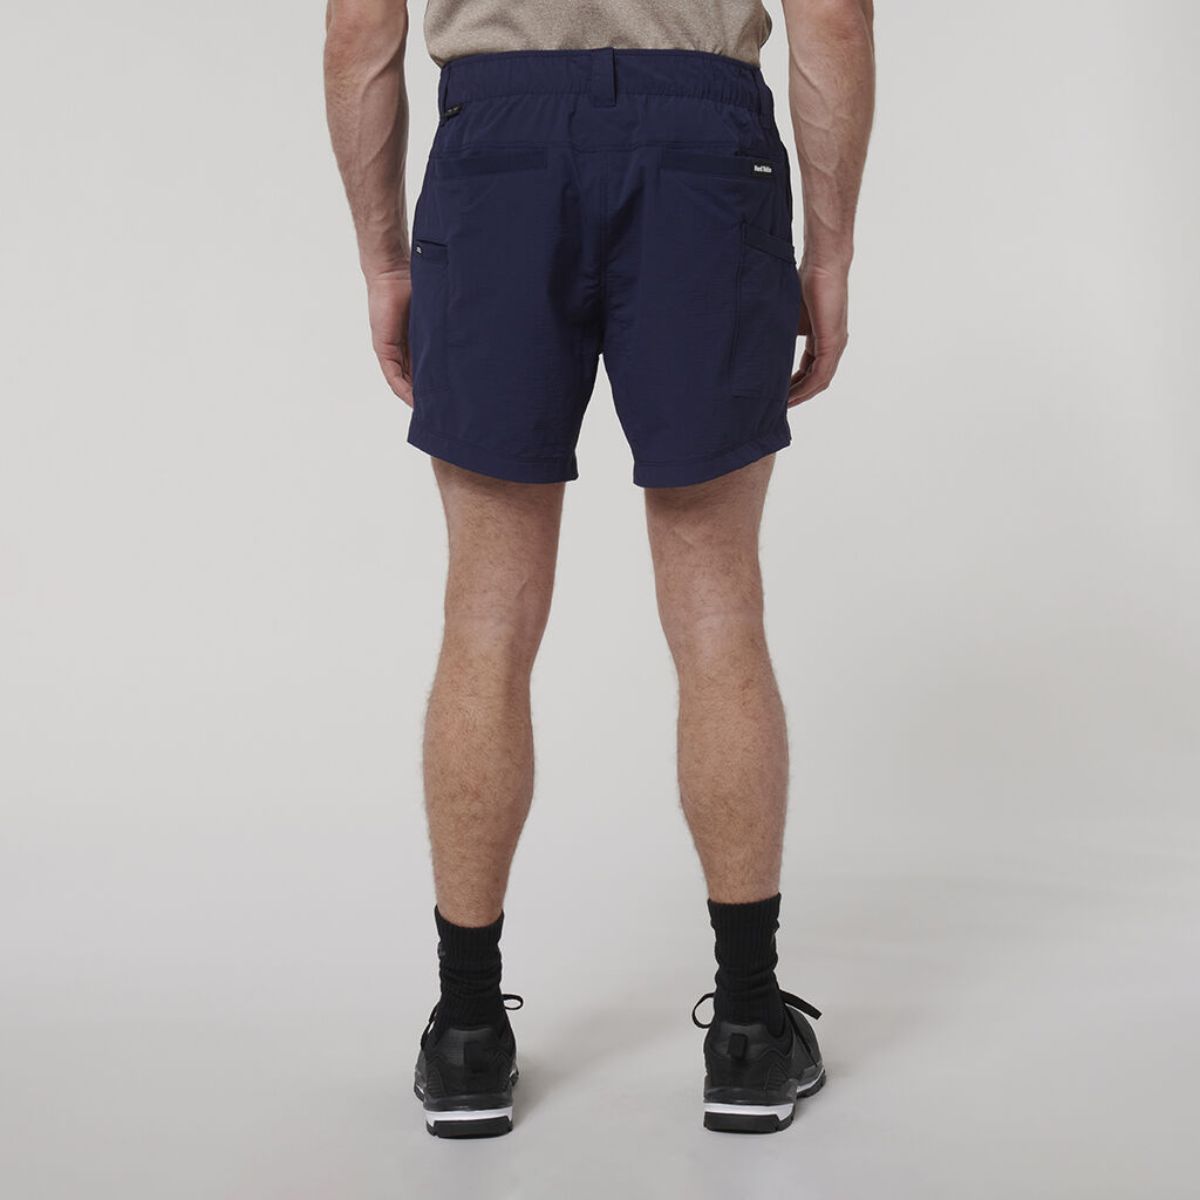 Hard Yakka Toughmaxx Short Shorts Y05166